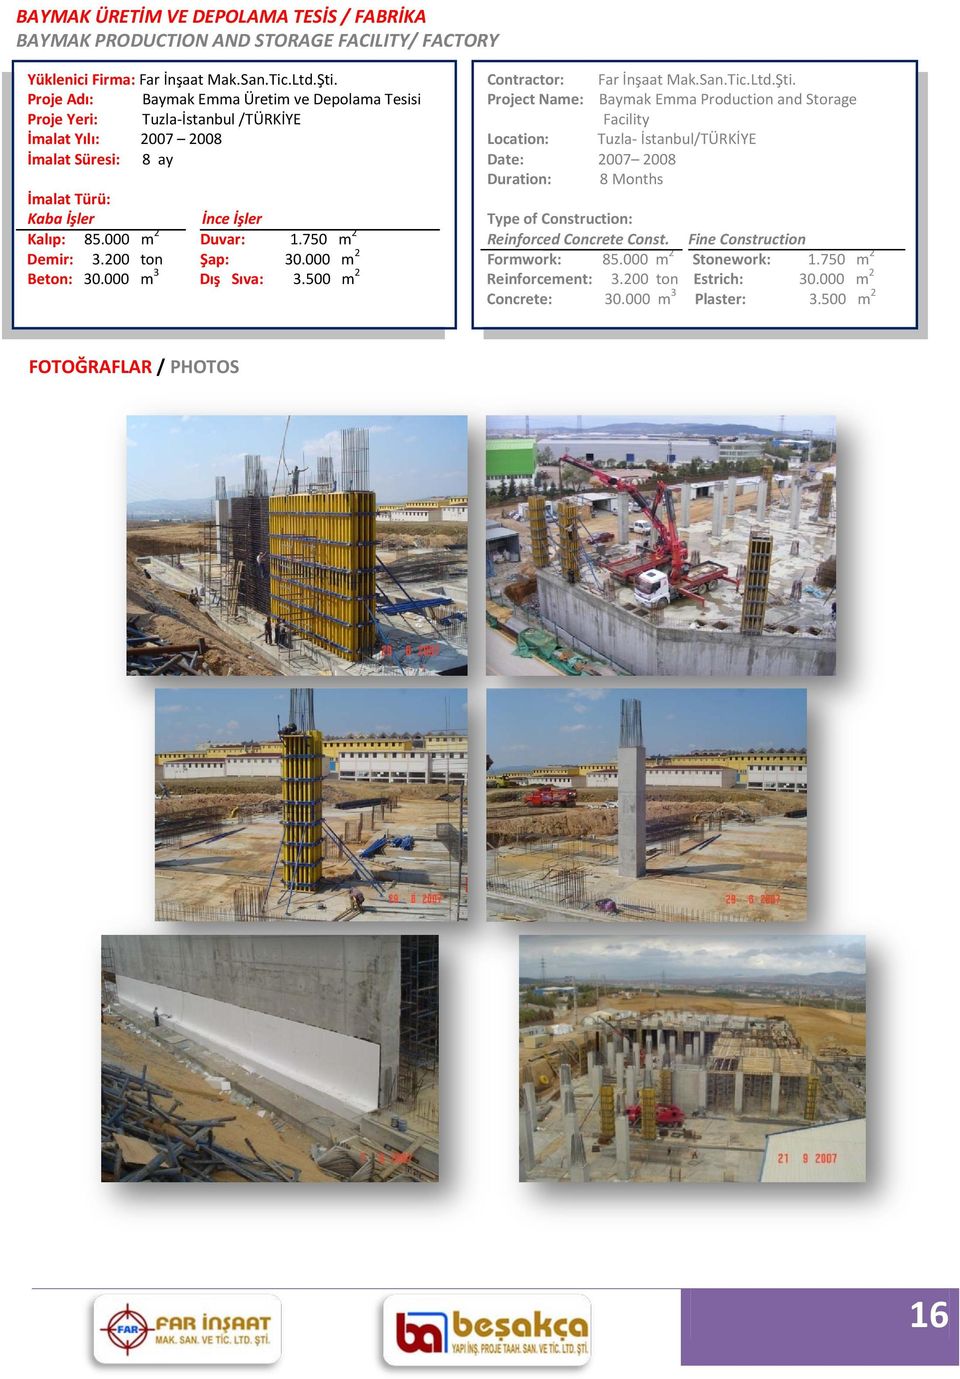 200 ton Şap: 30.000 m 2 Beton: 30.000 m 3 Dış Sıva: 3.500 m 2 Contractor: Project Name: Location: Date: 2007 2008 Duration: 8 Months Far İnşaat Mak.San.Tic.Ltd.Şti.